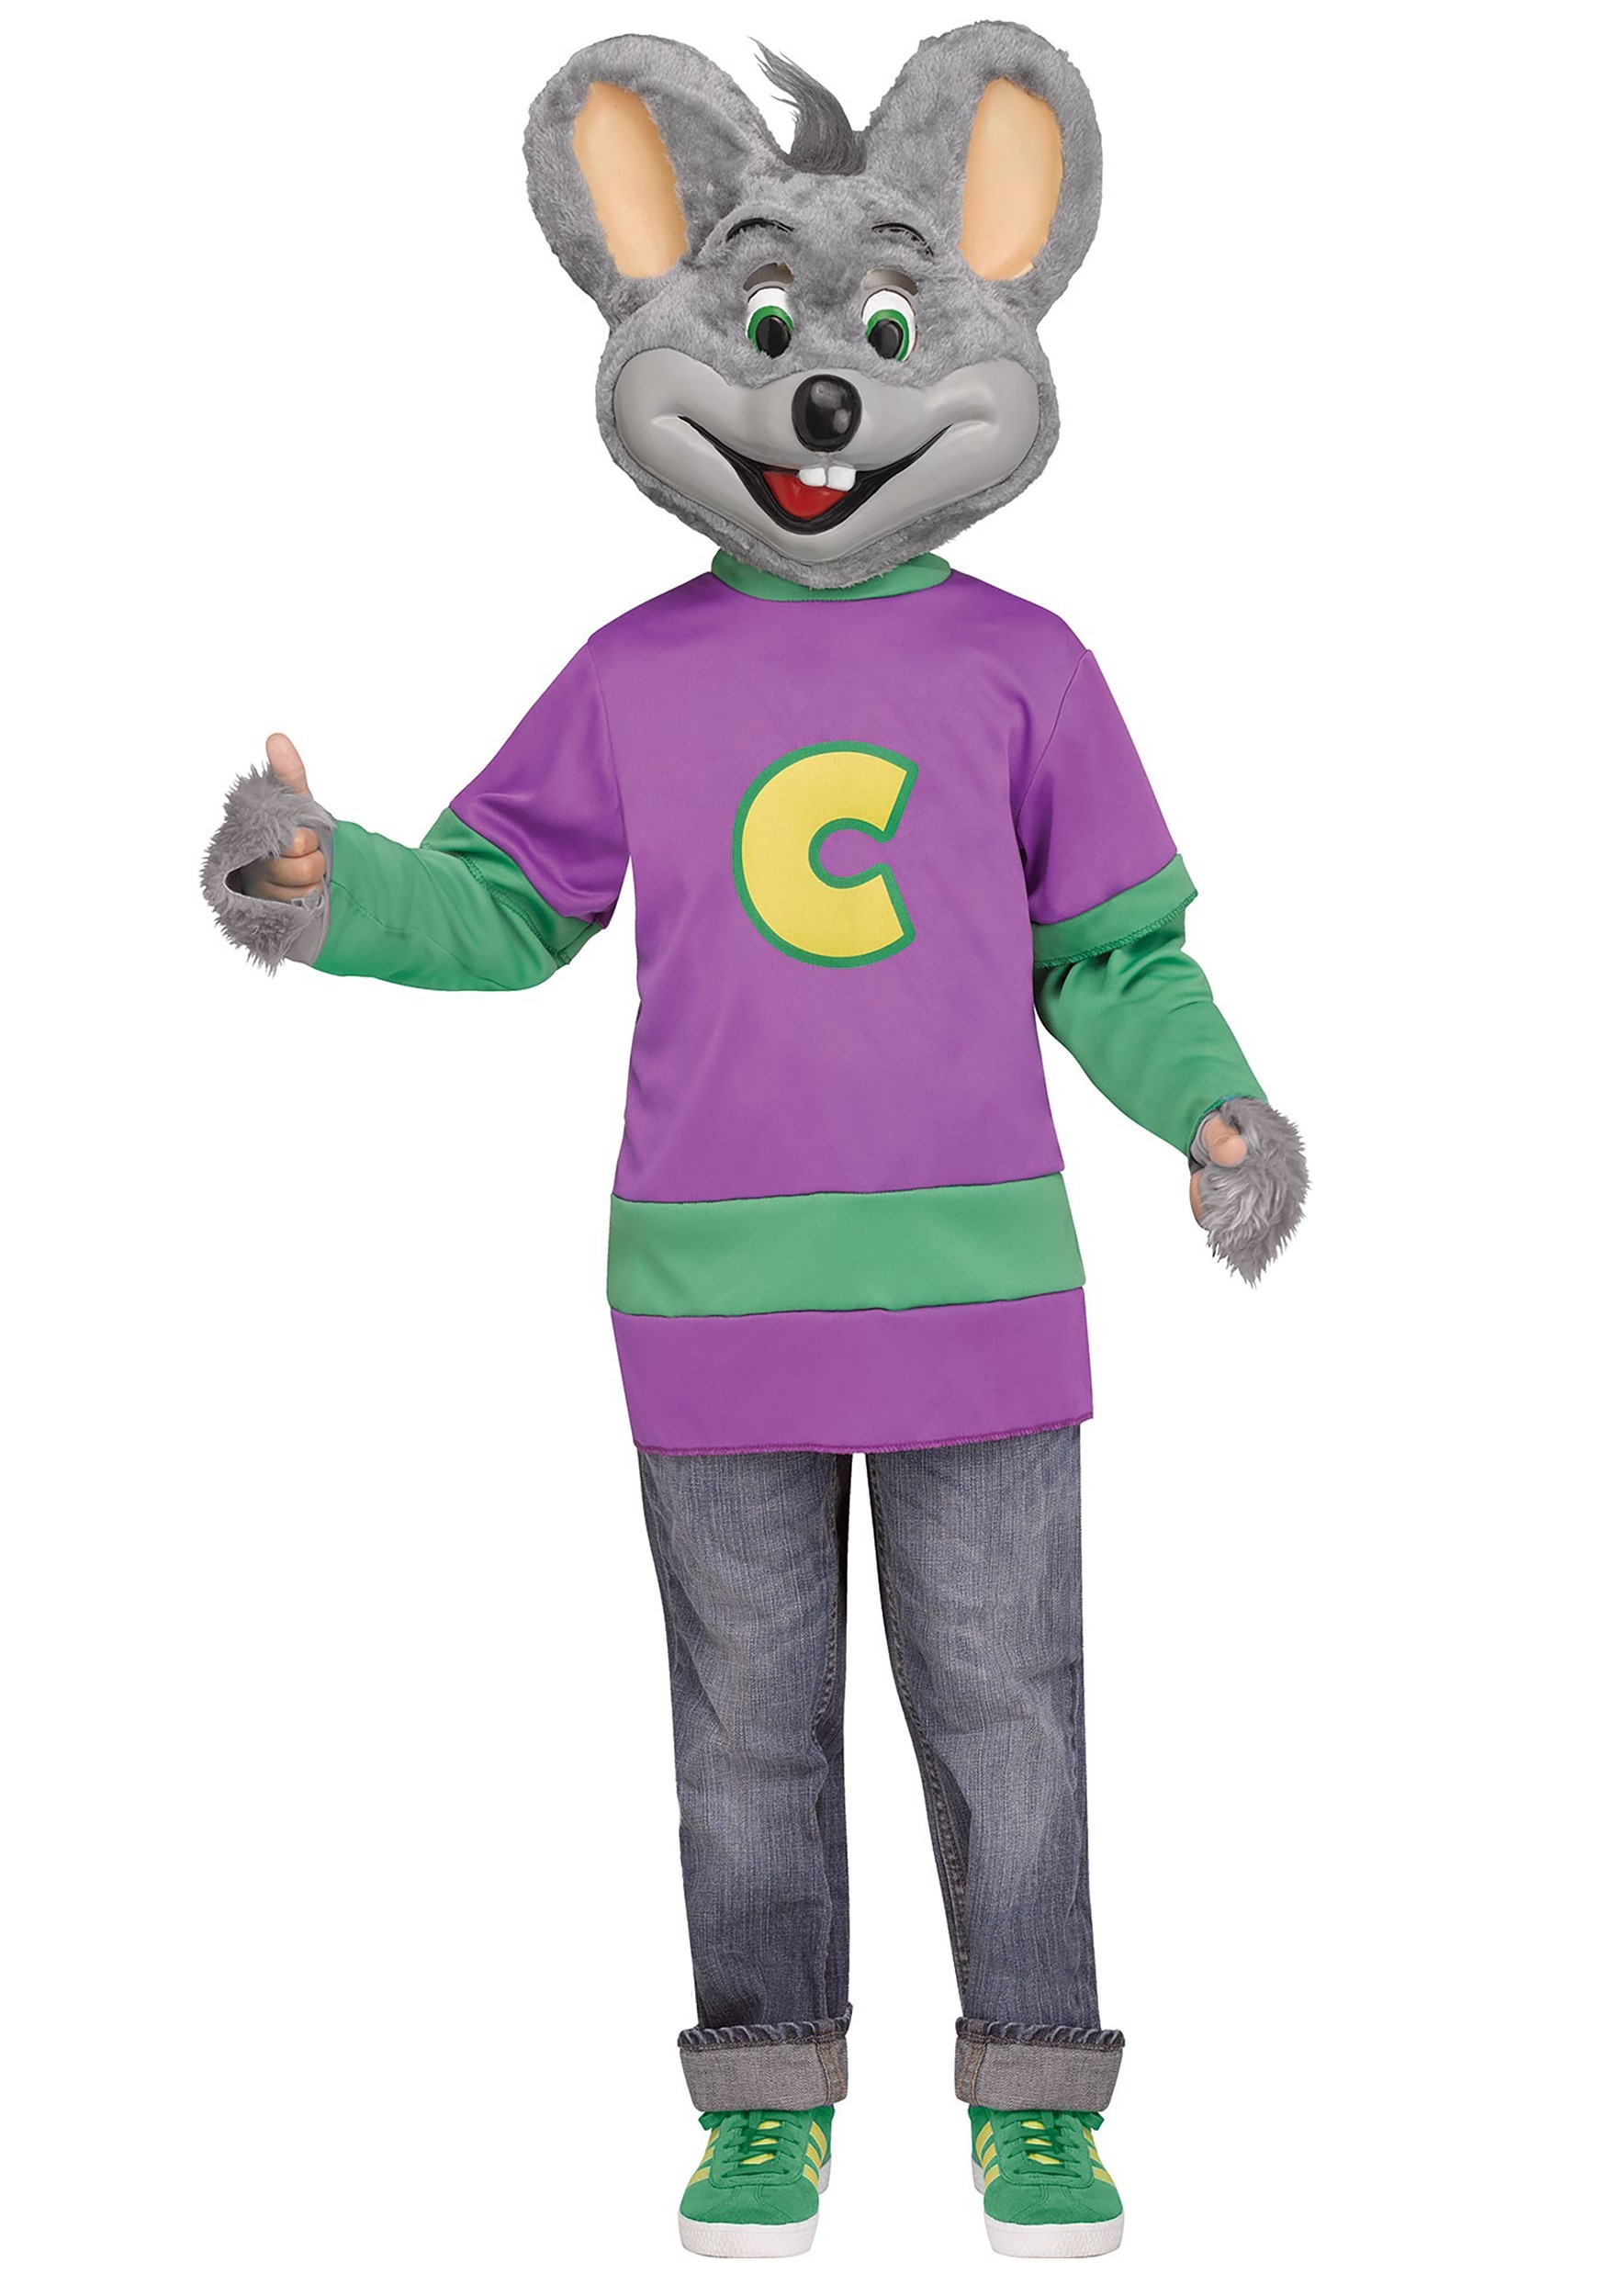 The Chuck E Cheese Kids Chuck E Cheese Costume